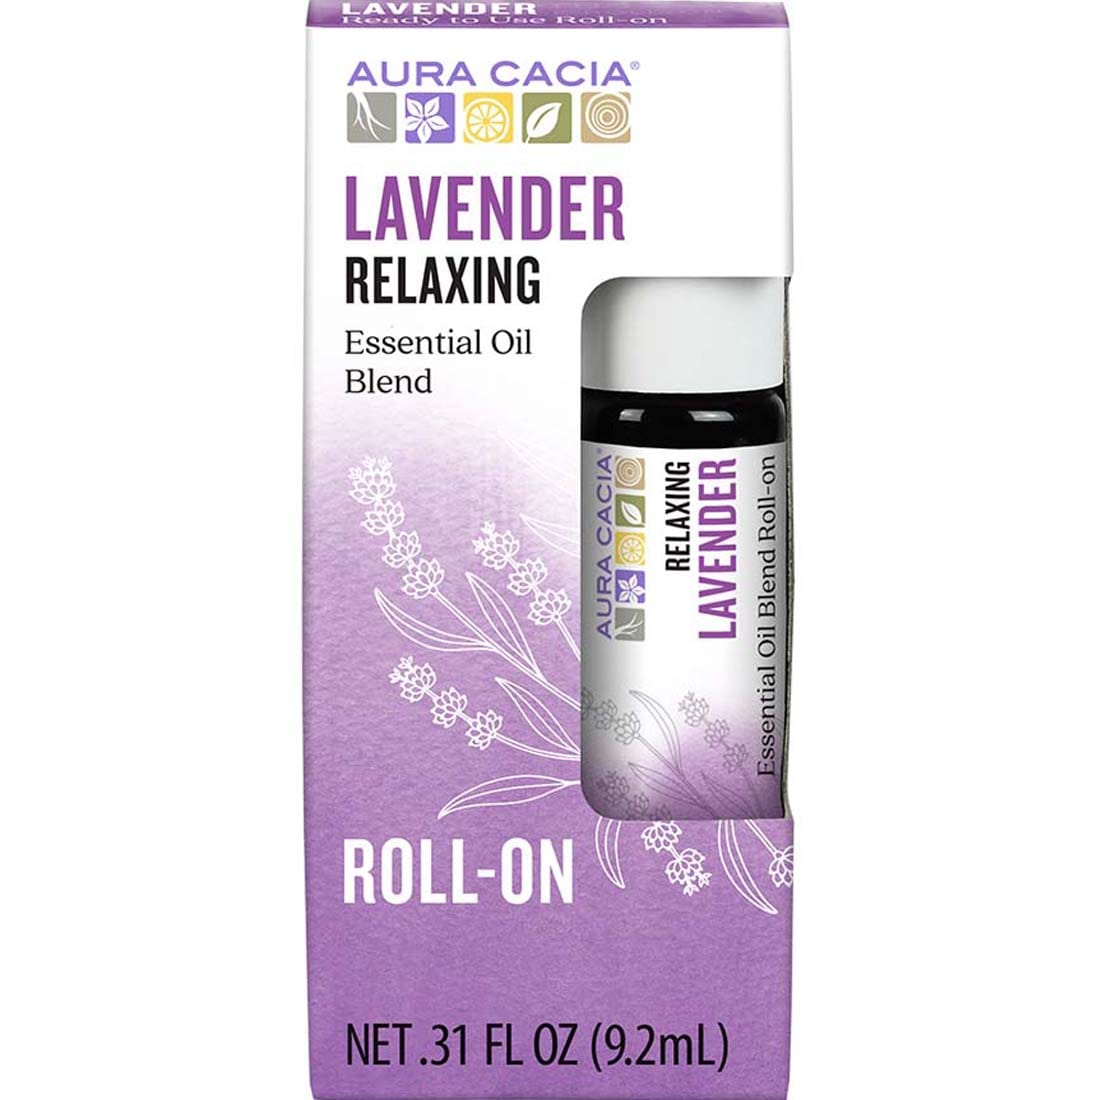 Aura Cacia Lavender Roll-On, 9ml